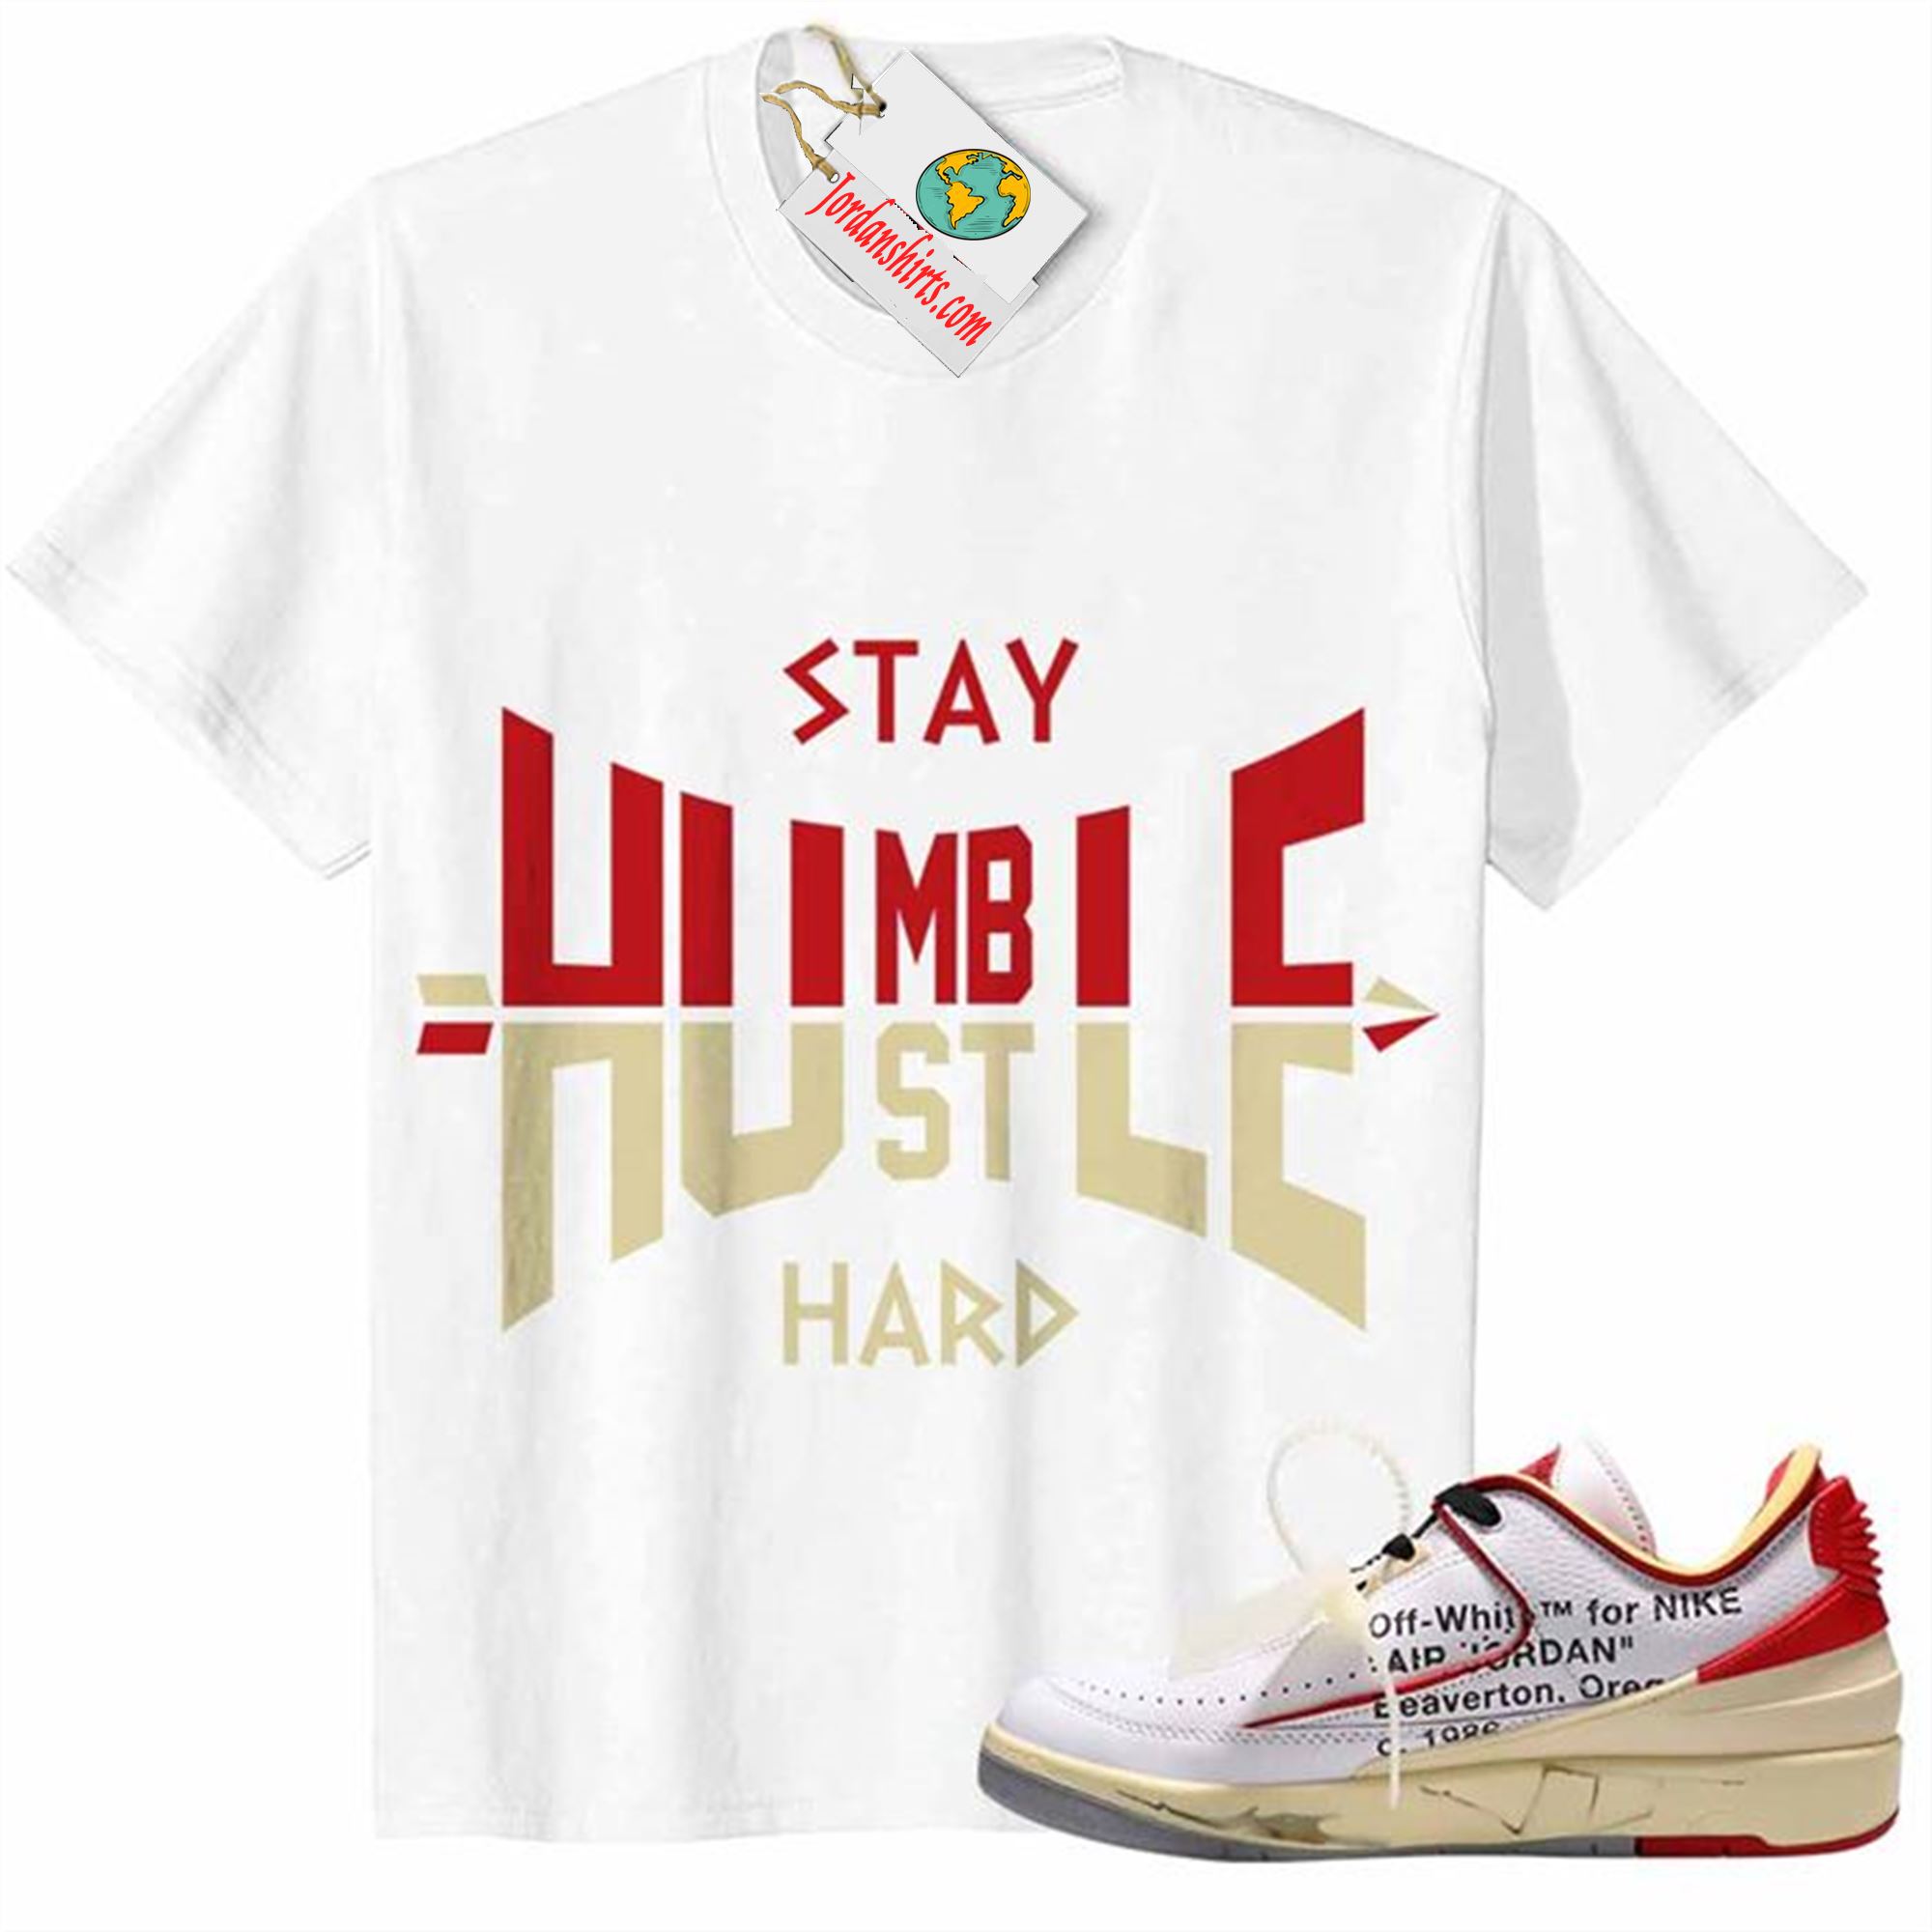 Jordan 2 Shirt, Humble Hustle Hard White Air Jordan 2 Low White Red Off-white 2s Full Size Up To 5xl